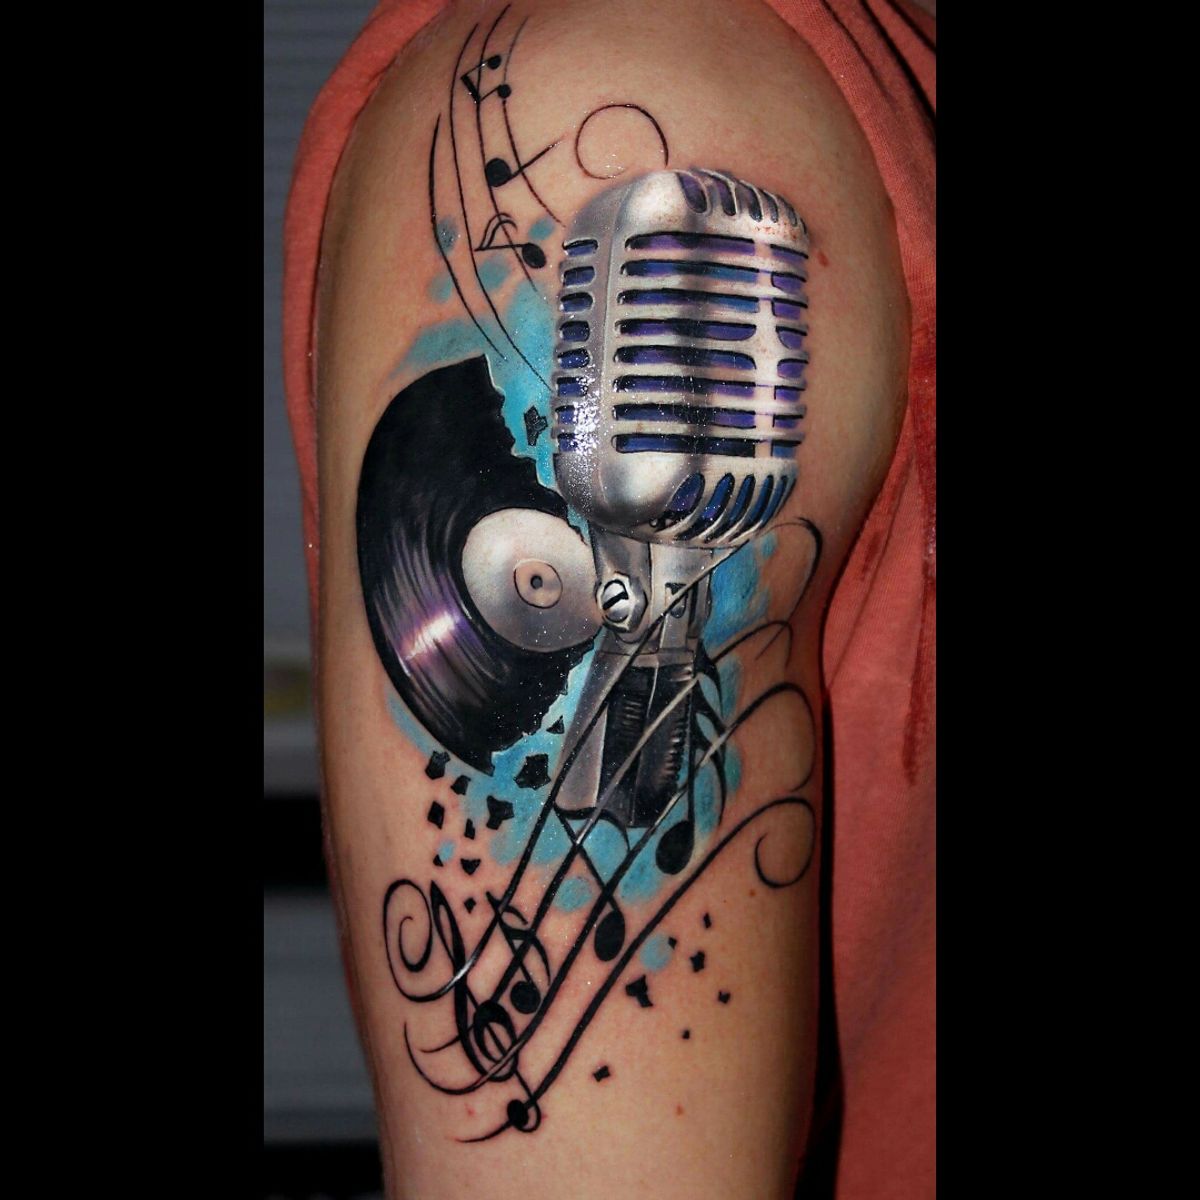 Tattoo uploaded by Djordje Tomovic #tattoo #dreamtattoo #Tattoodo #microphone #record #music #musical #musictattoo #ink #color • Tattoodo